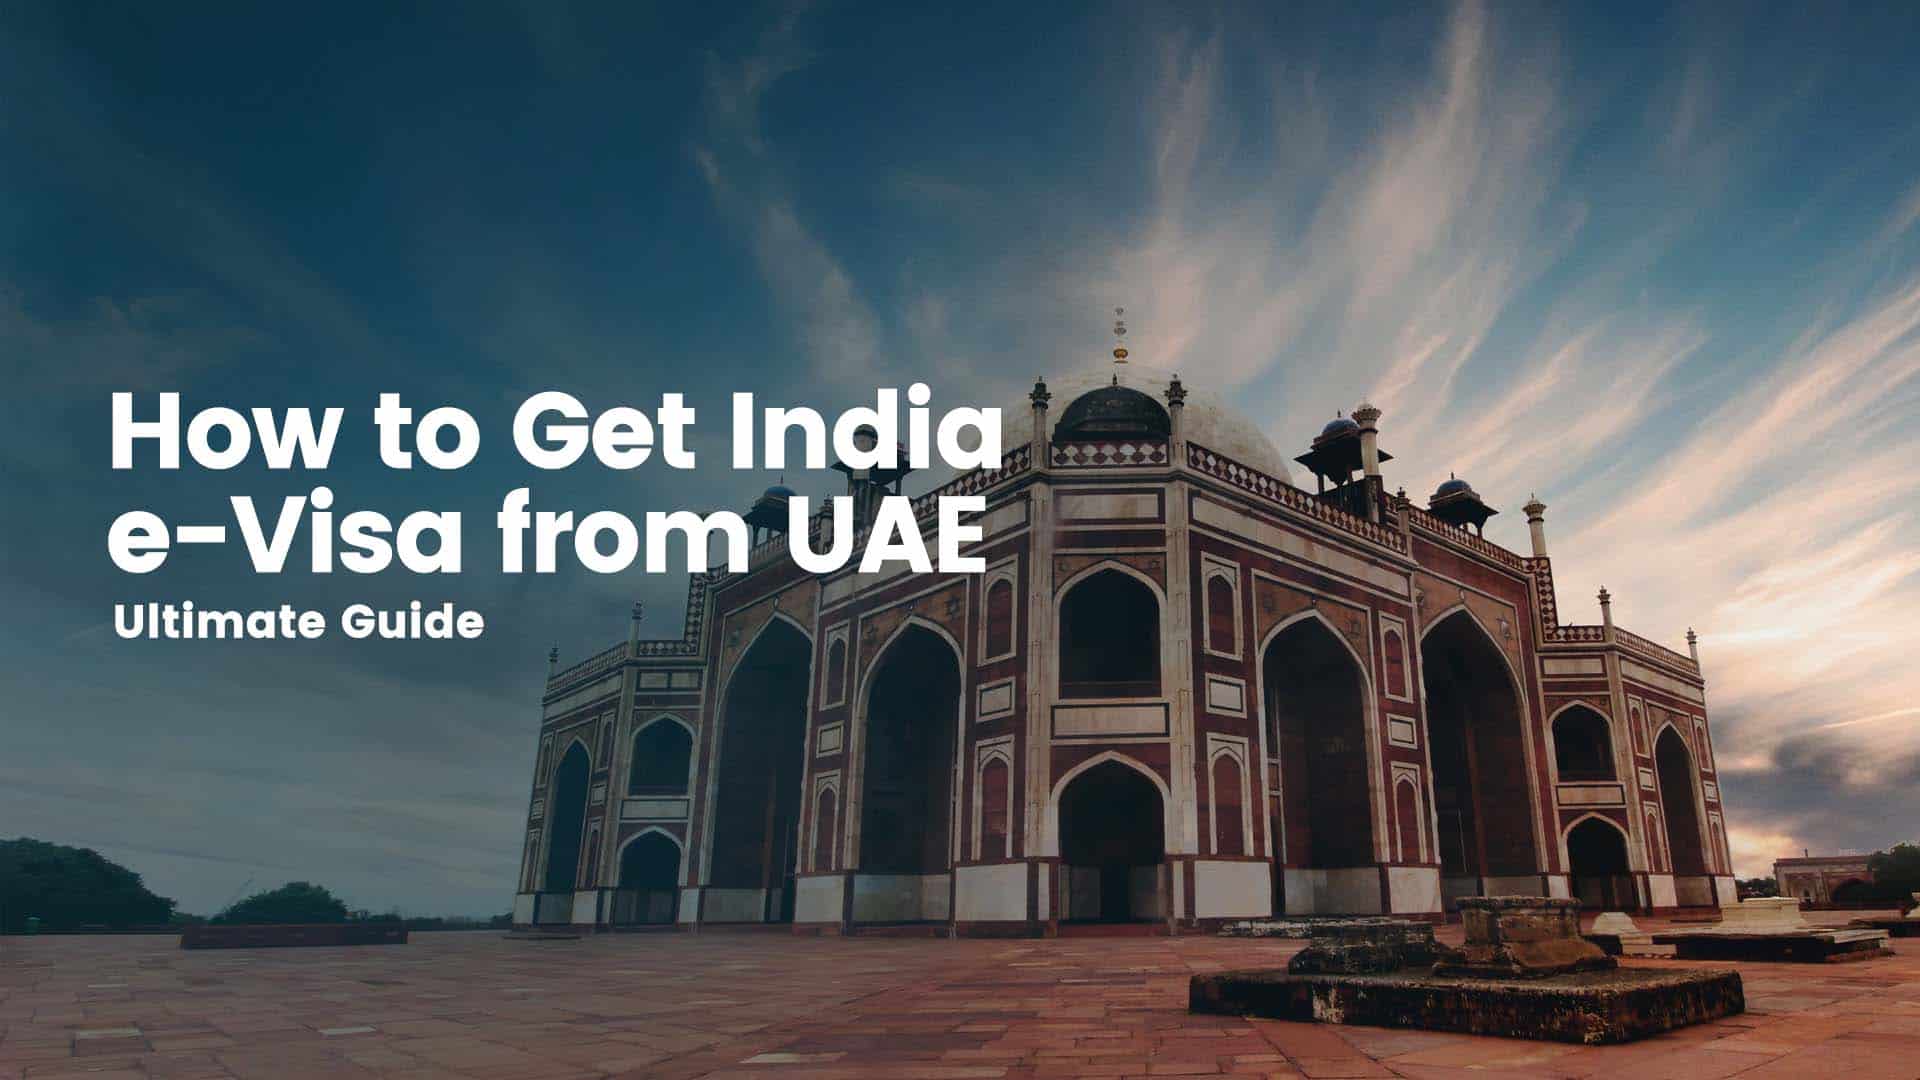 Indian Visa from Emirates Dubai: Navigating the Application Process